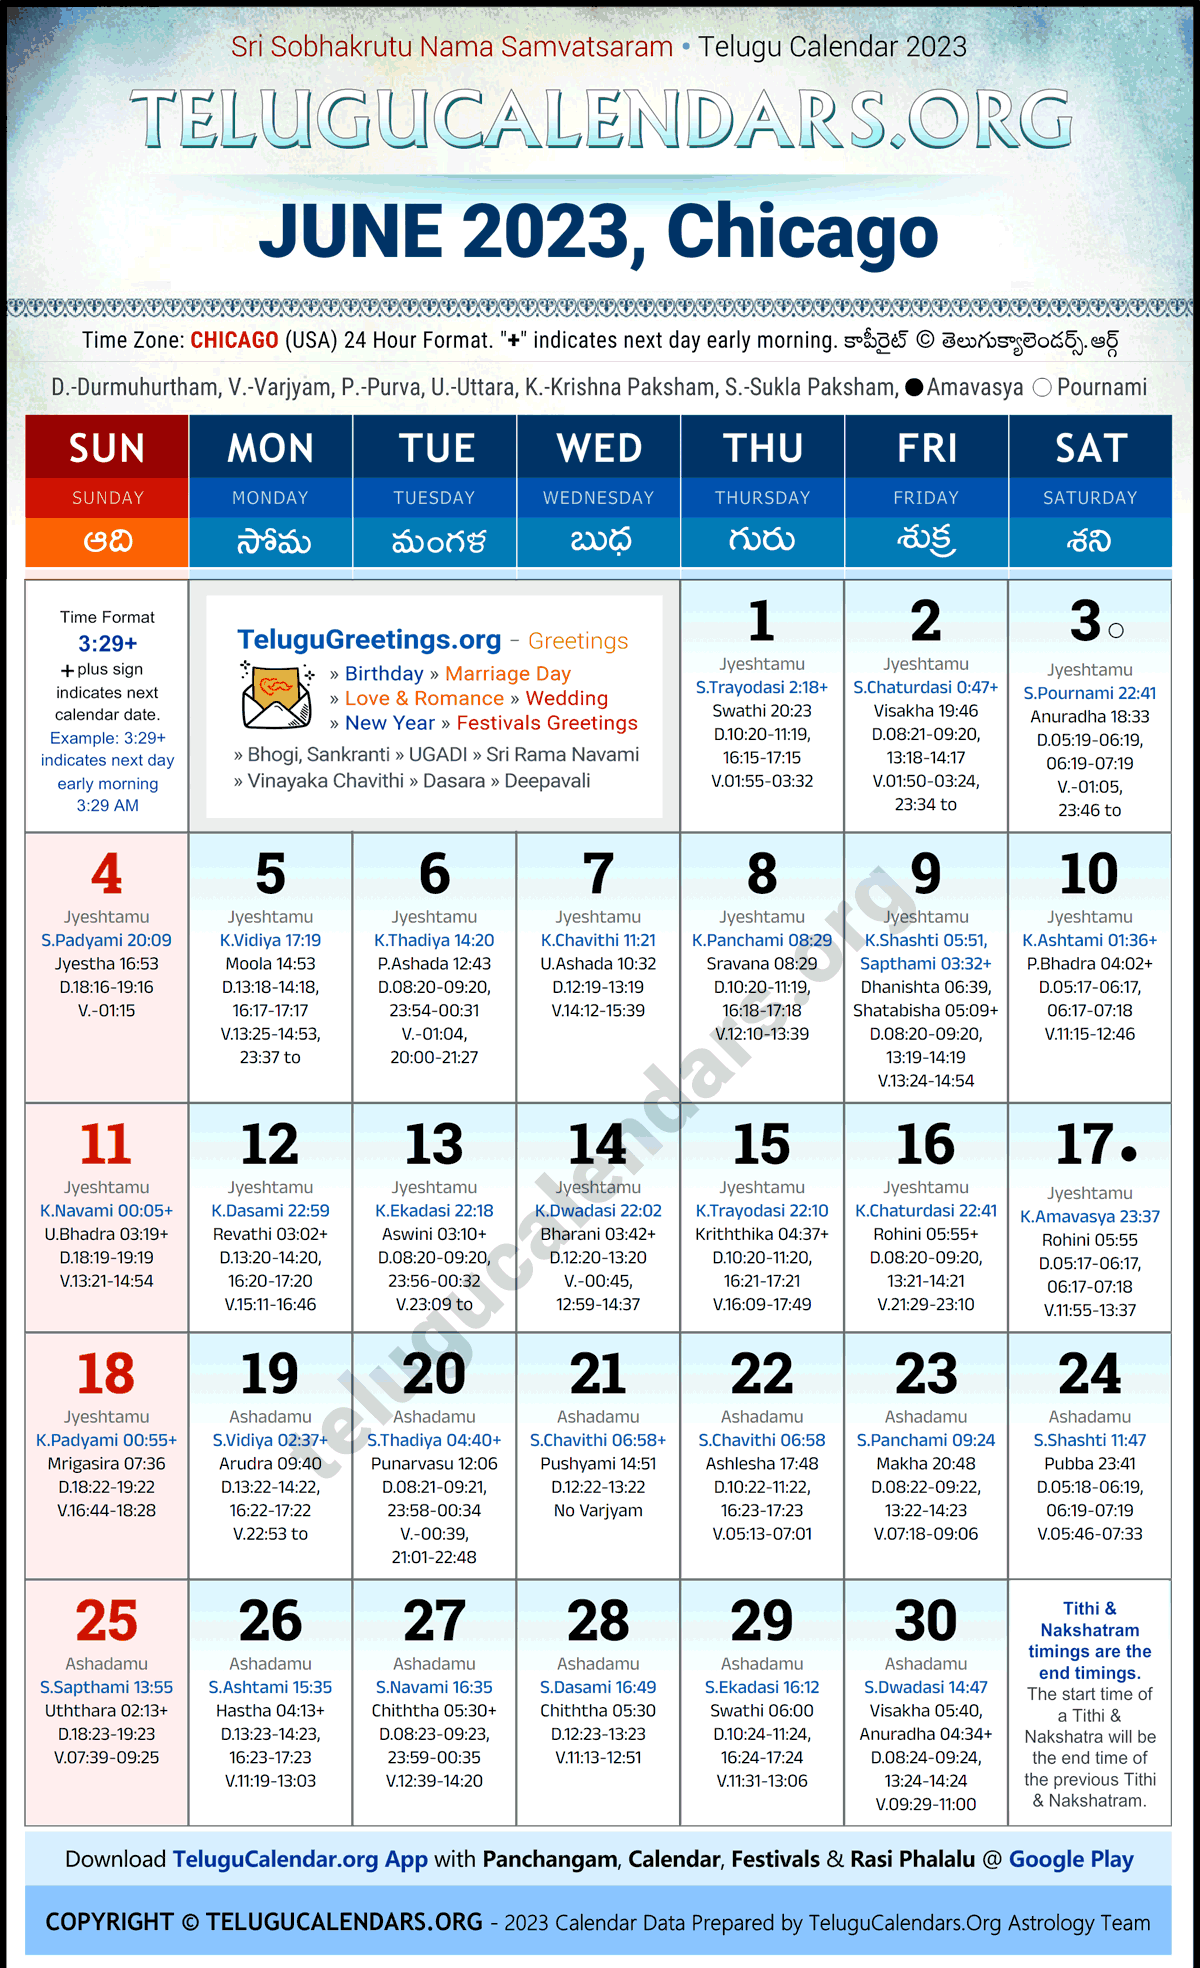 Telugu Calendar 2023 June Festivals for Chicago